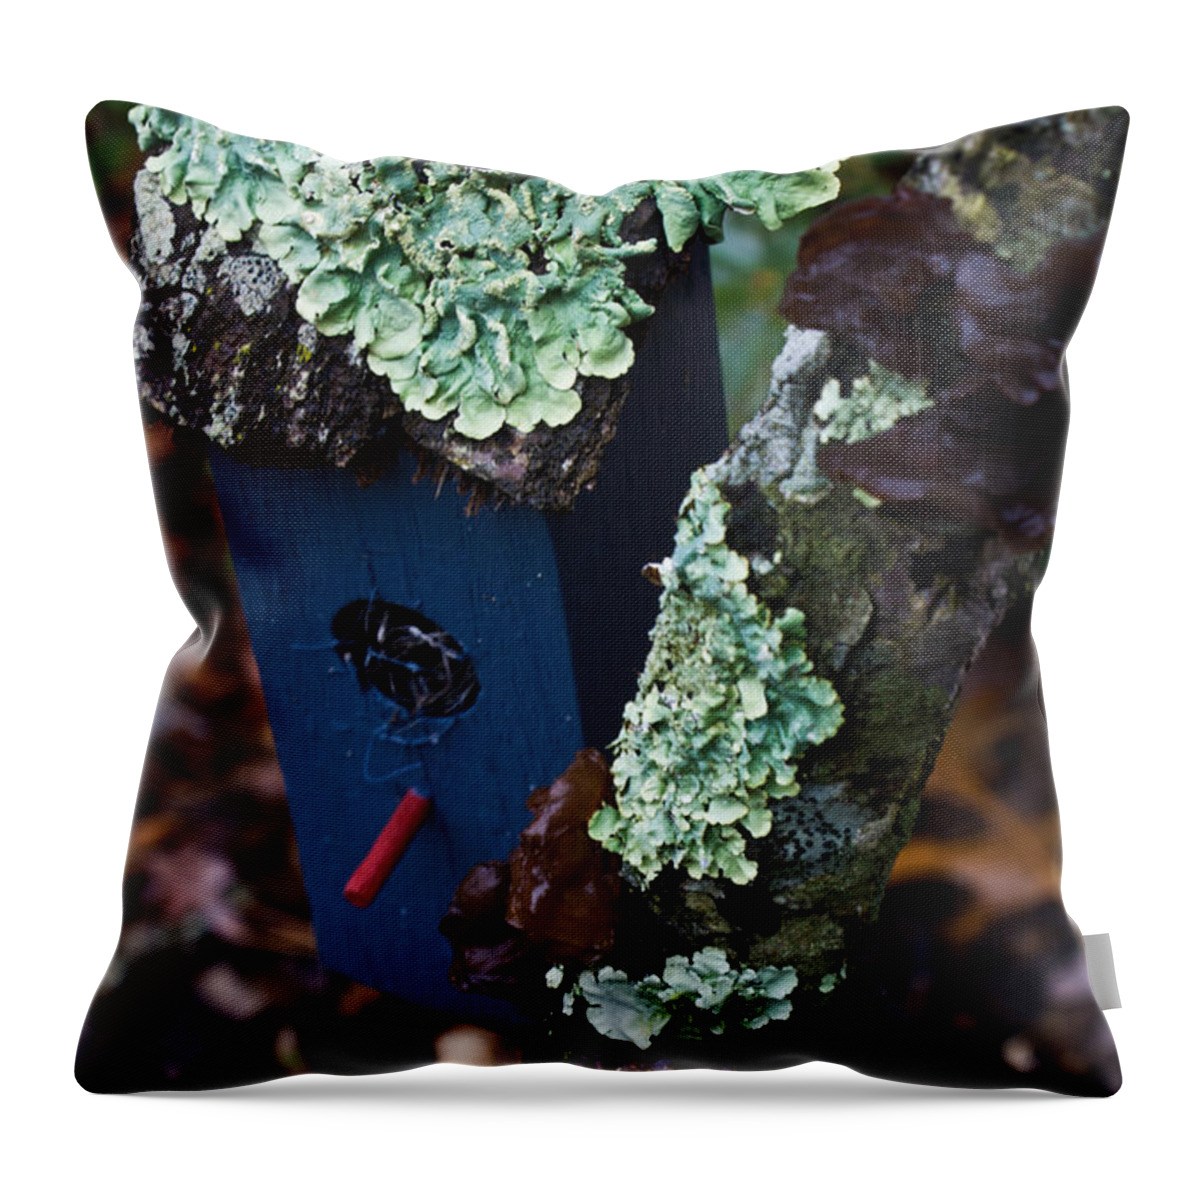 Blue Throw Pillow featuring the photograph Blue Birdhouse and Lichen by Douglas Barnett